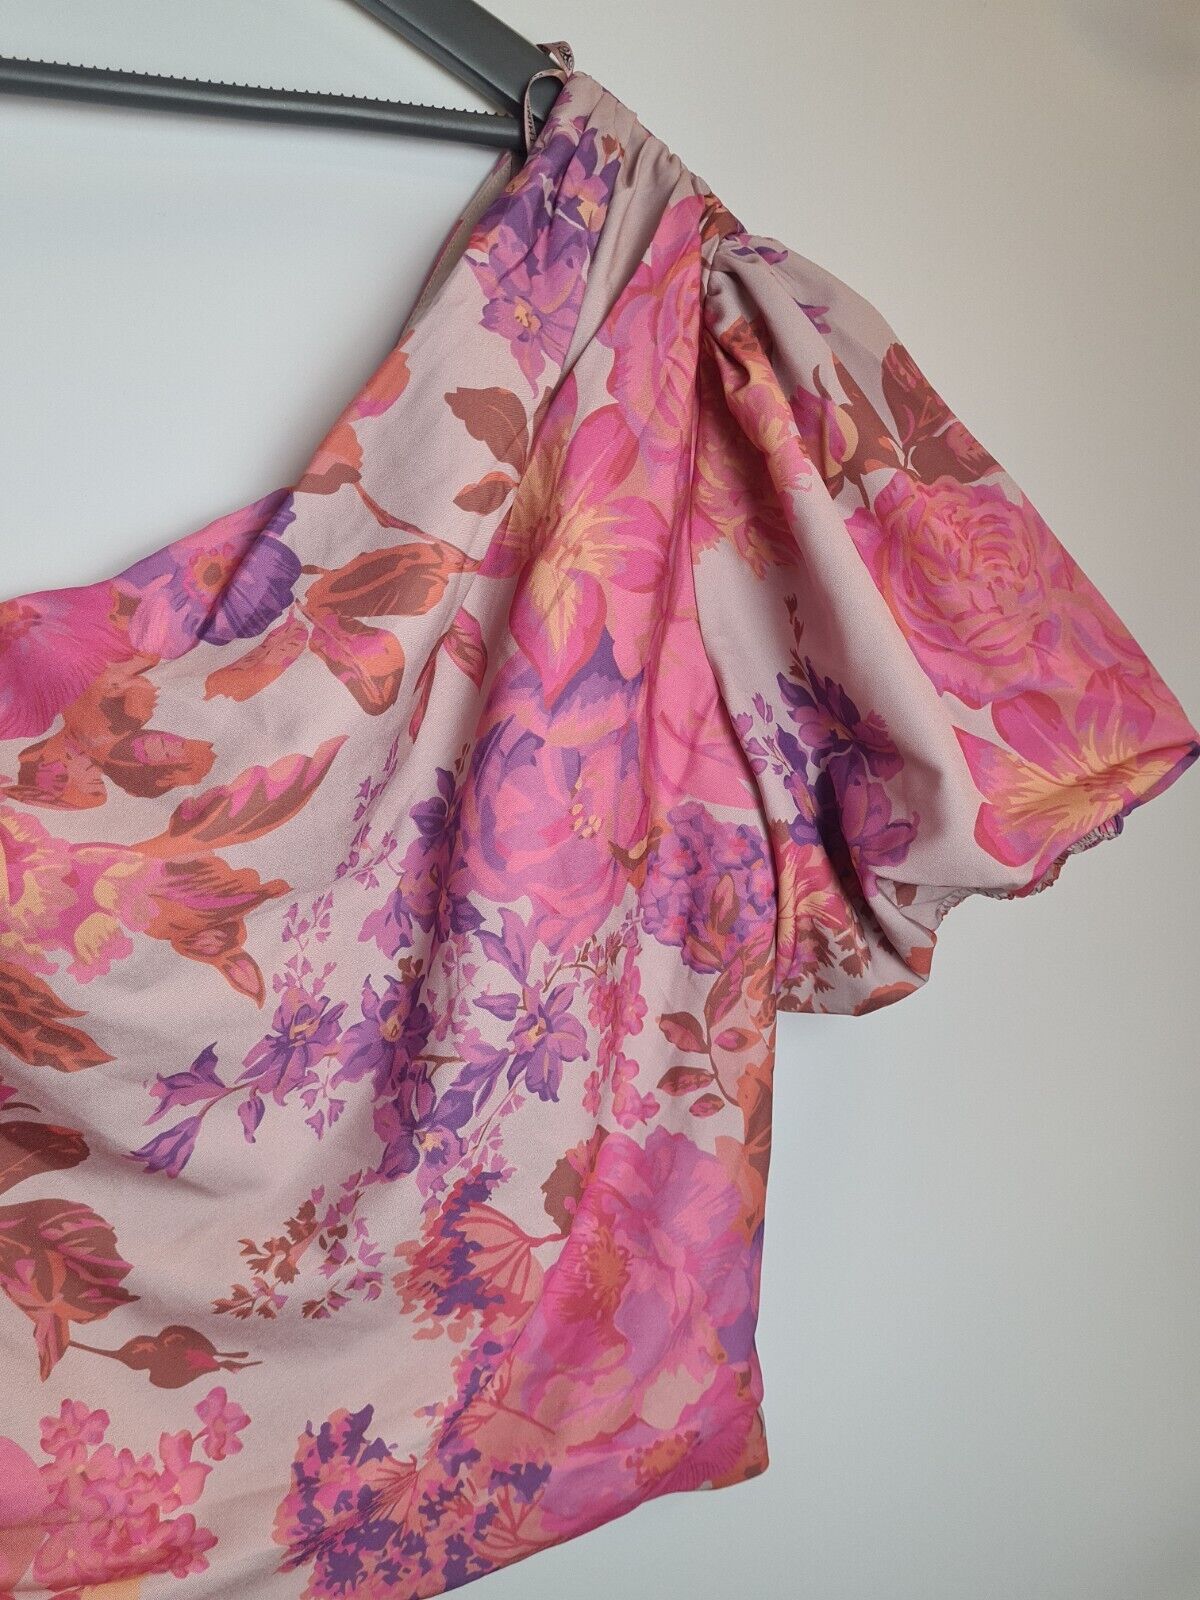 Chi Chi London Pink One Shoulder Floral Print Top Size 8 ****SW12